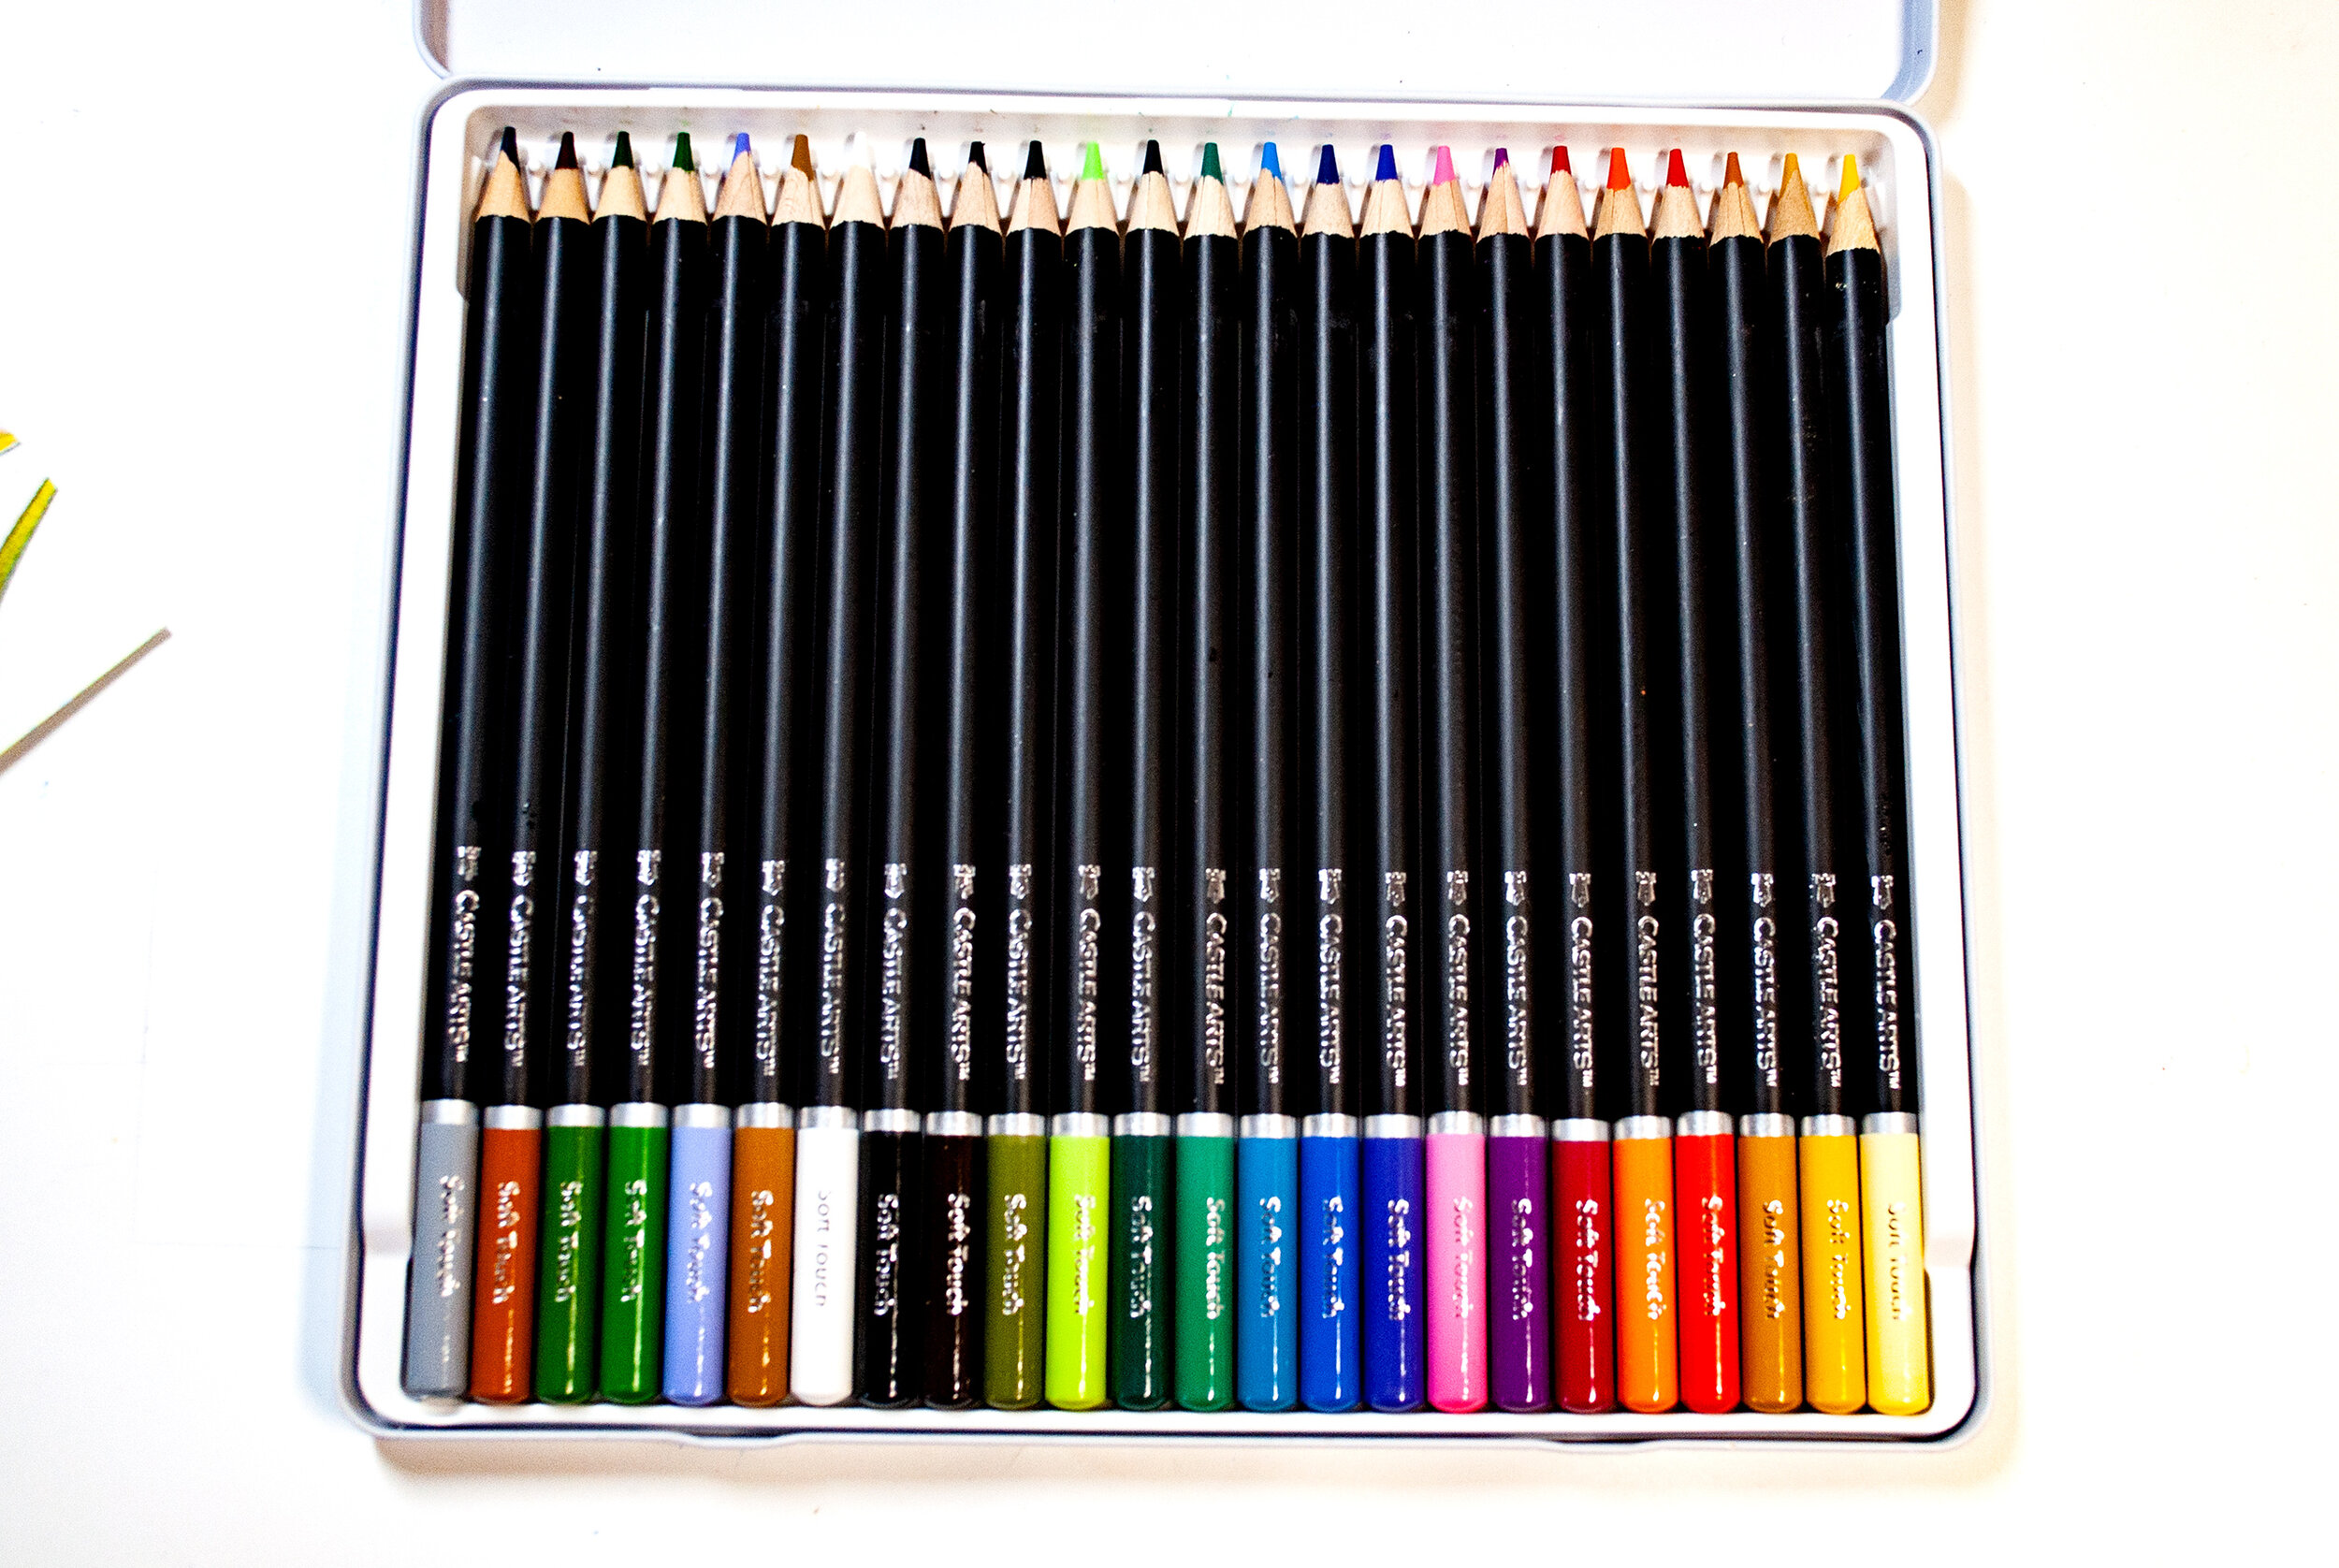 Castle Arts Specialist Colored Pencil Sets — The Art Gear Guide